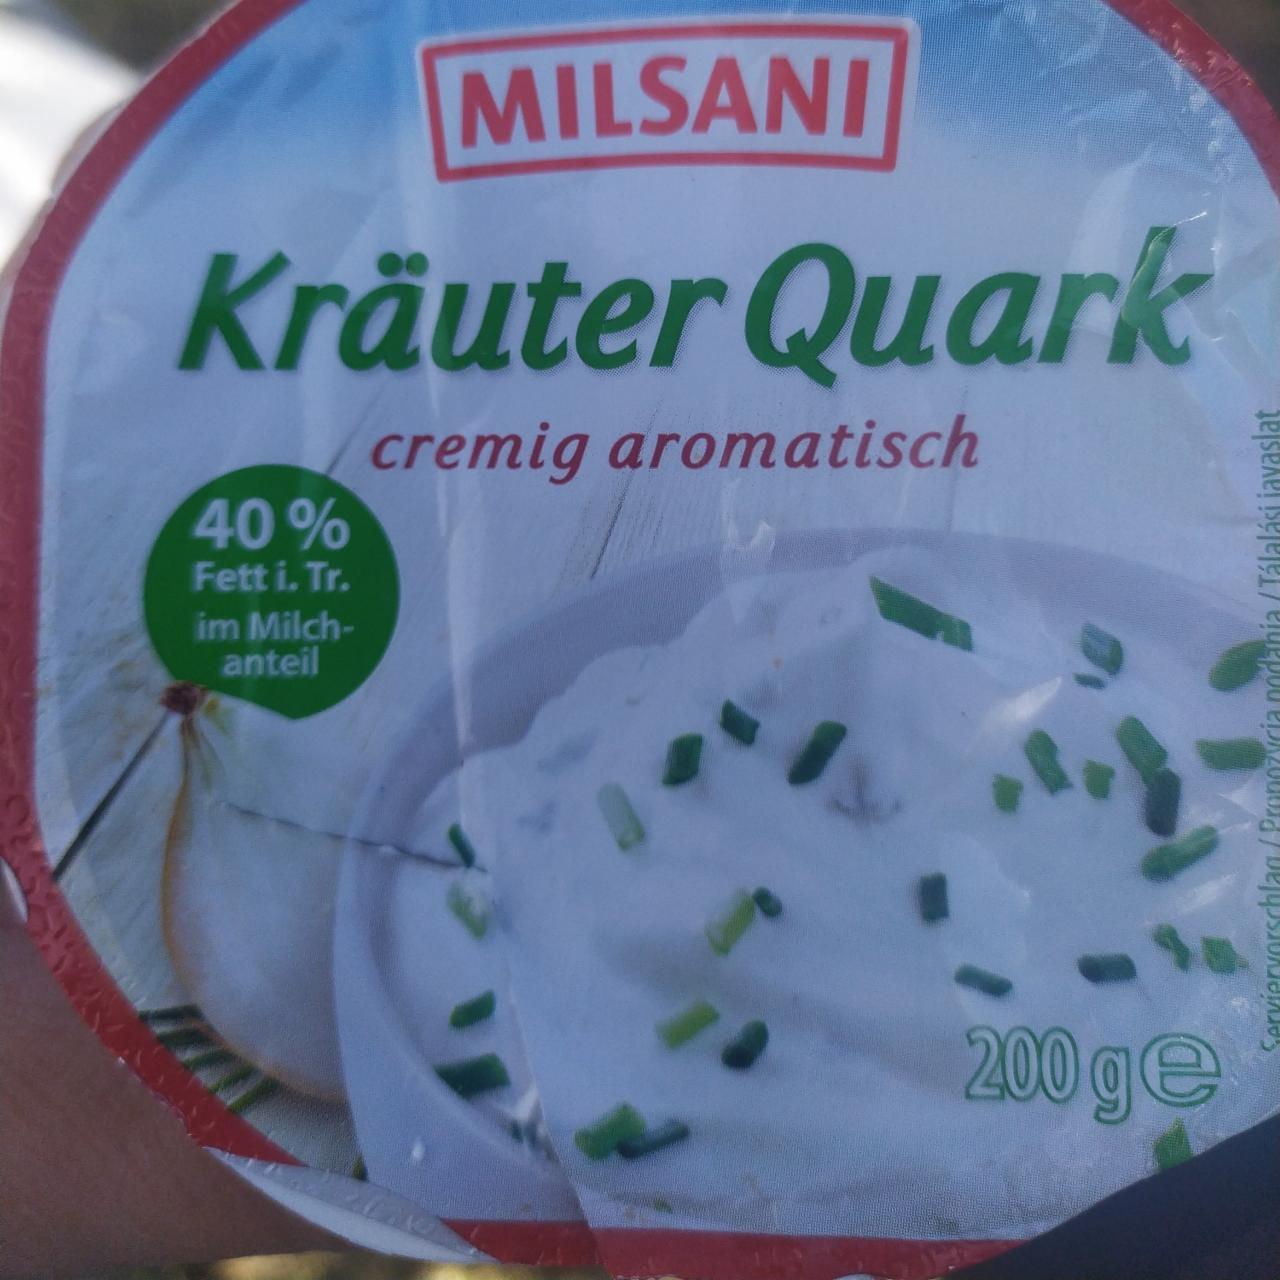 Fotografie - Kräuter Quark cremig aromatisch Milsani